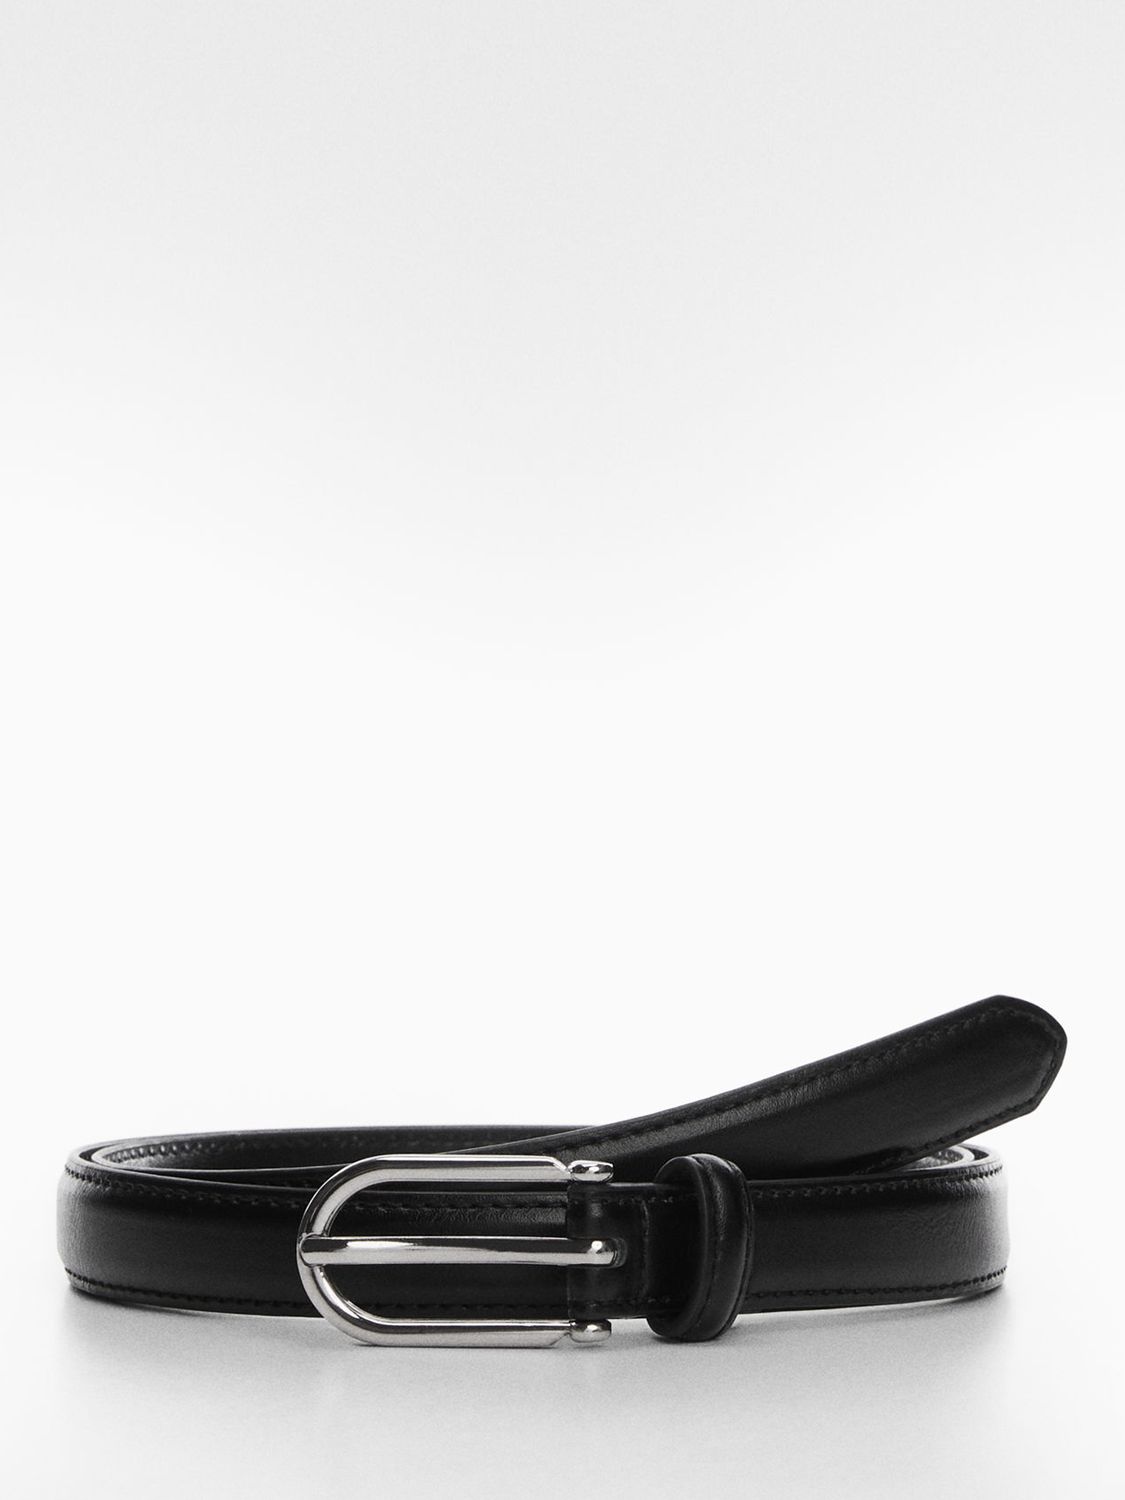 Casual Dress Faux Leather Belts For Men | Mens Belt For Suits Uniform Auto  Lock Buckle PU Leather Belt cut to fit